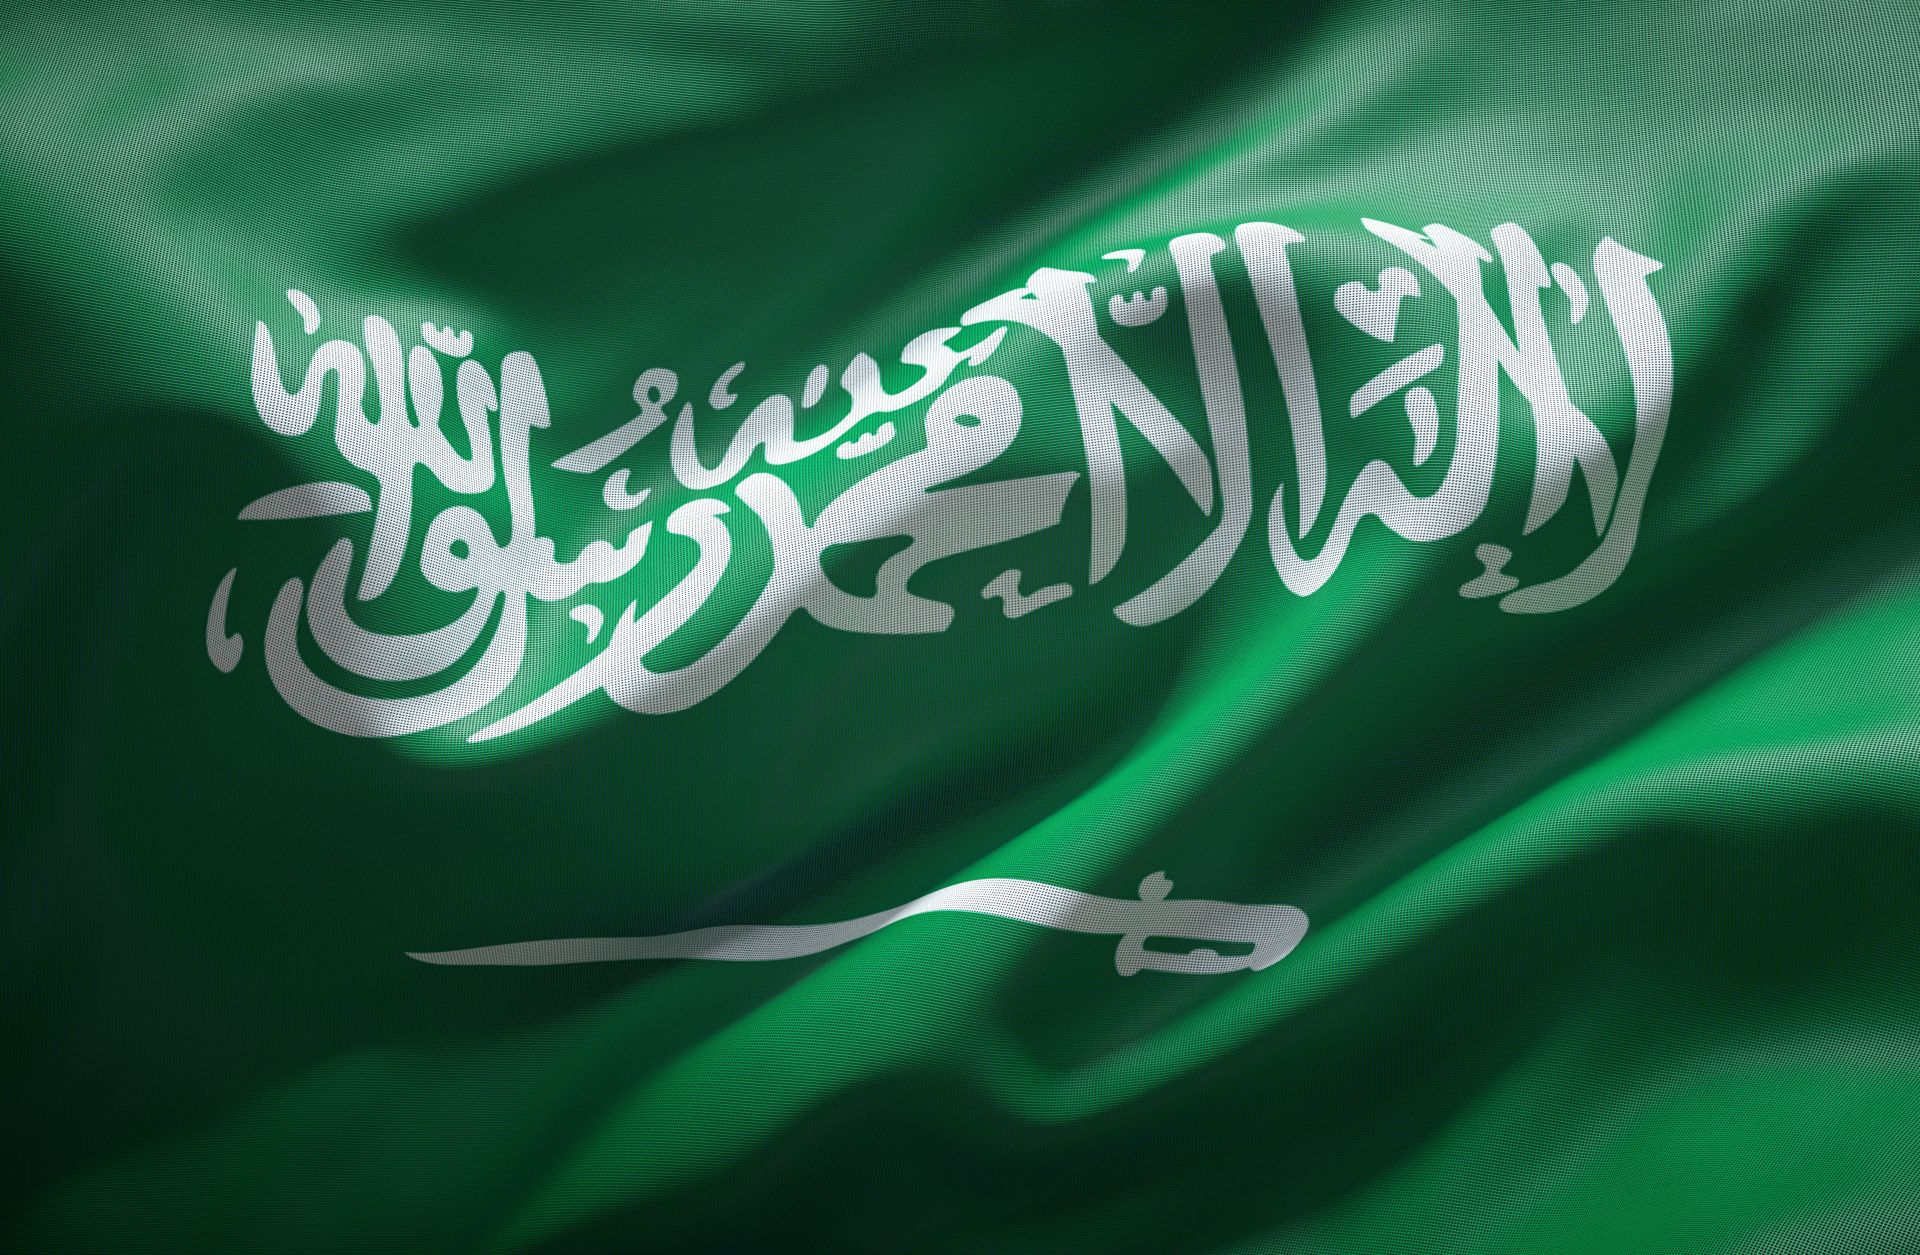 An image shows the national flag of Saudi Arabia.